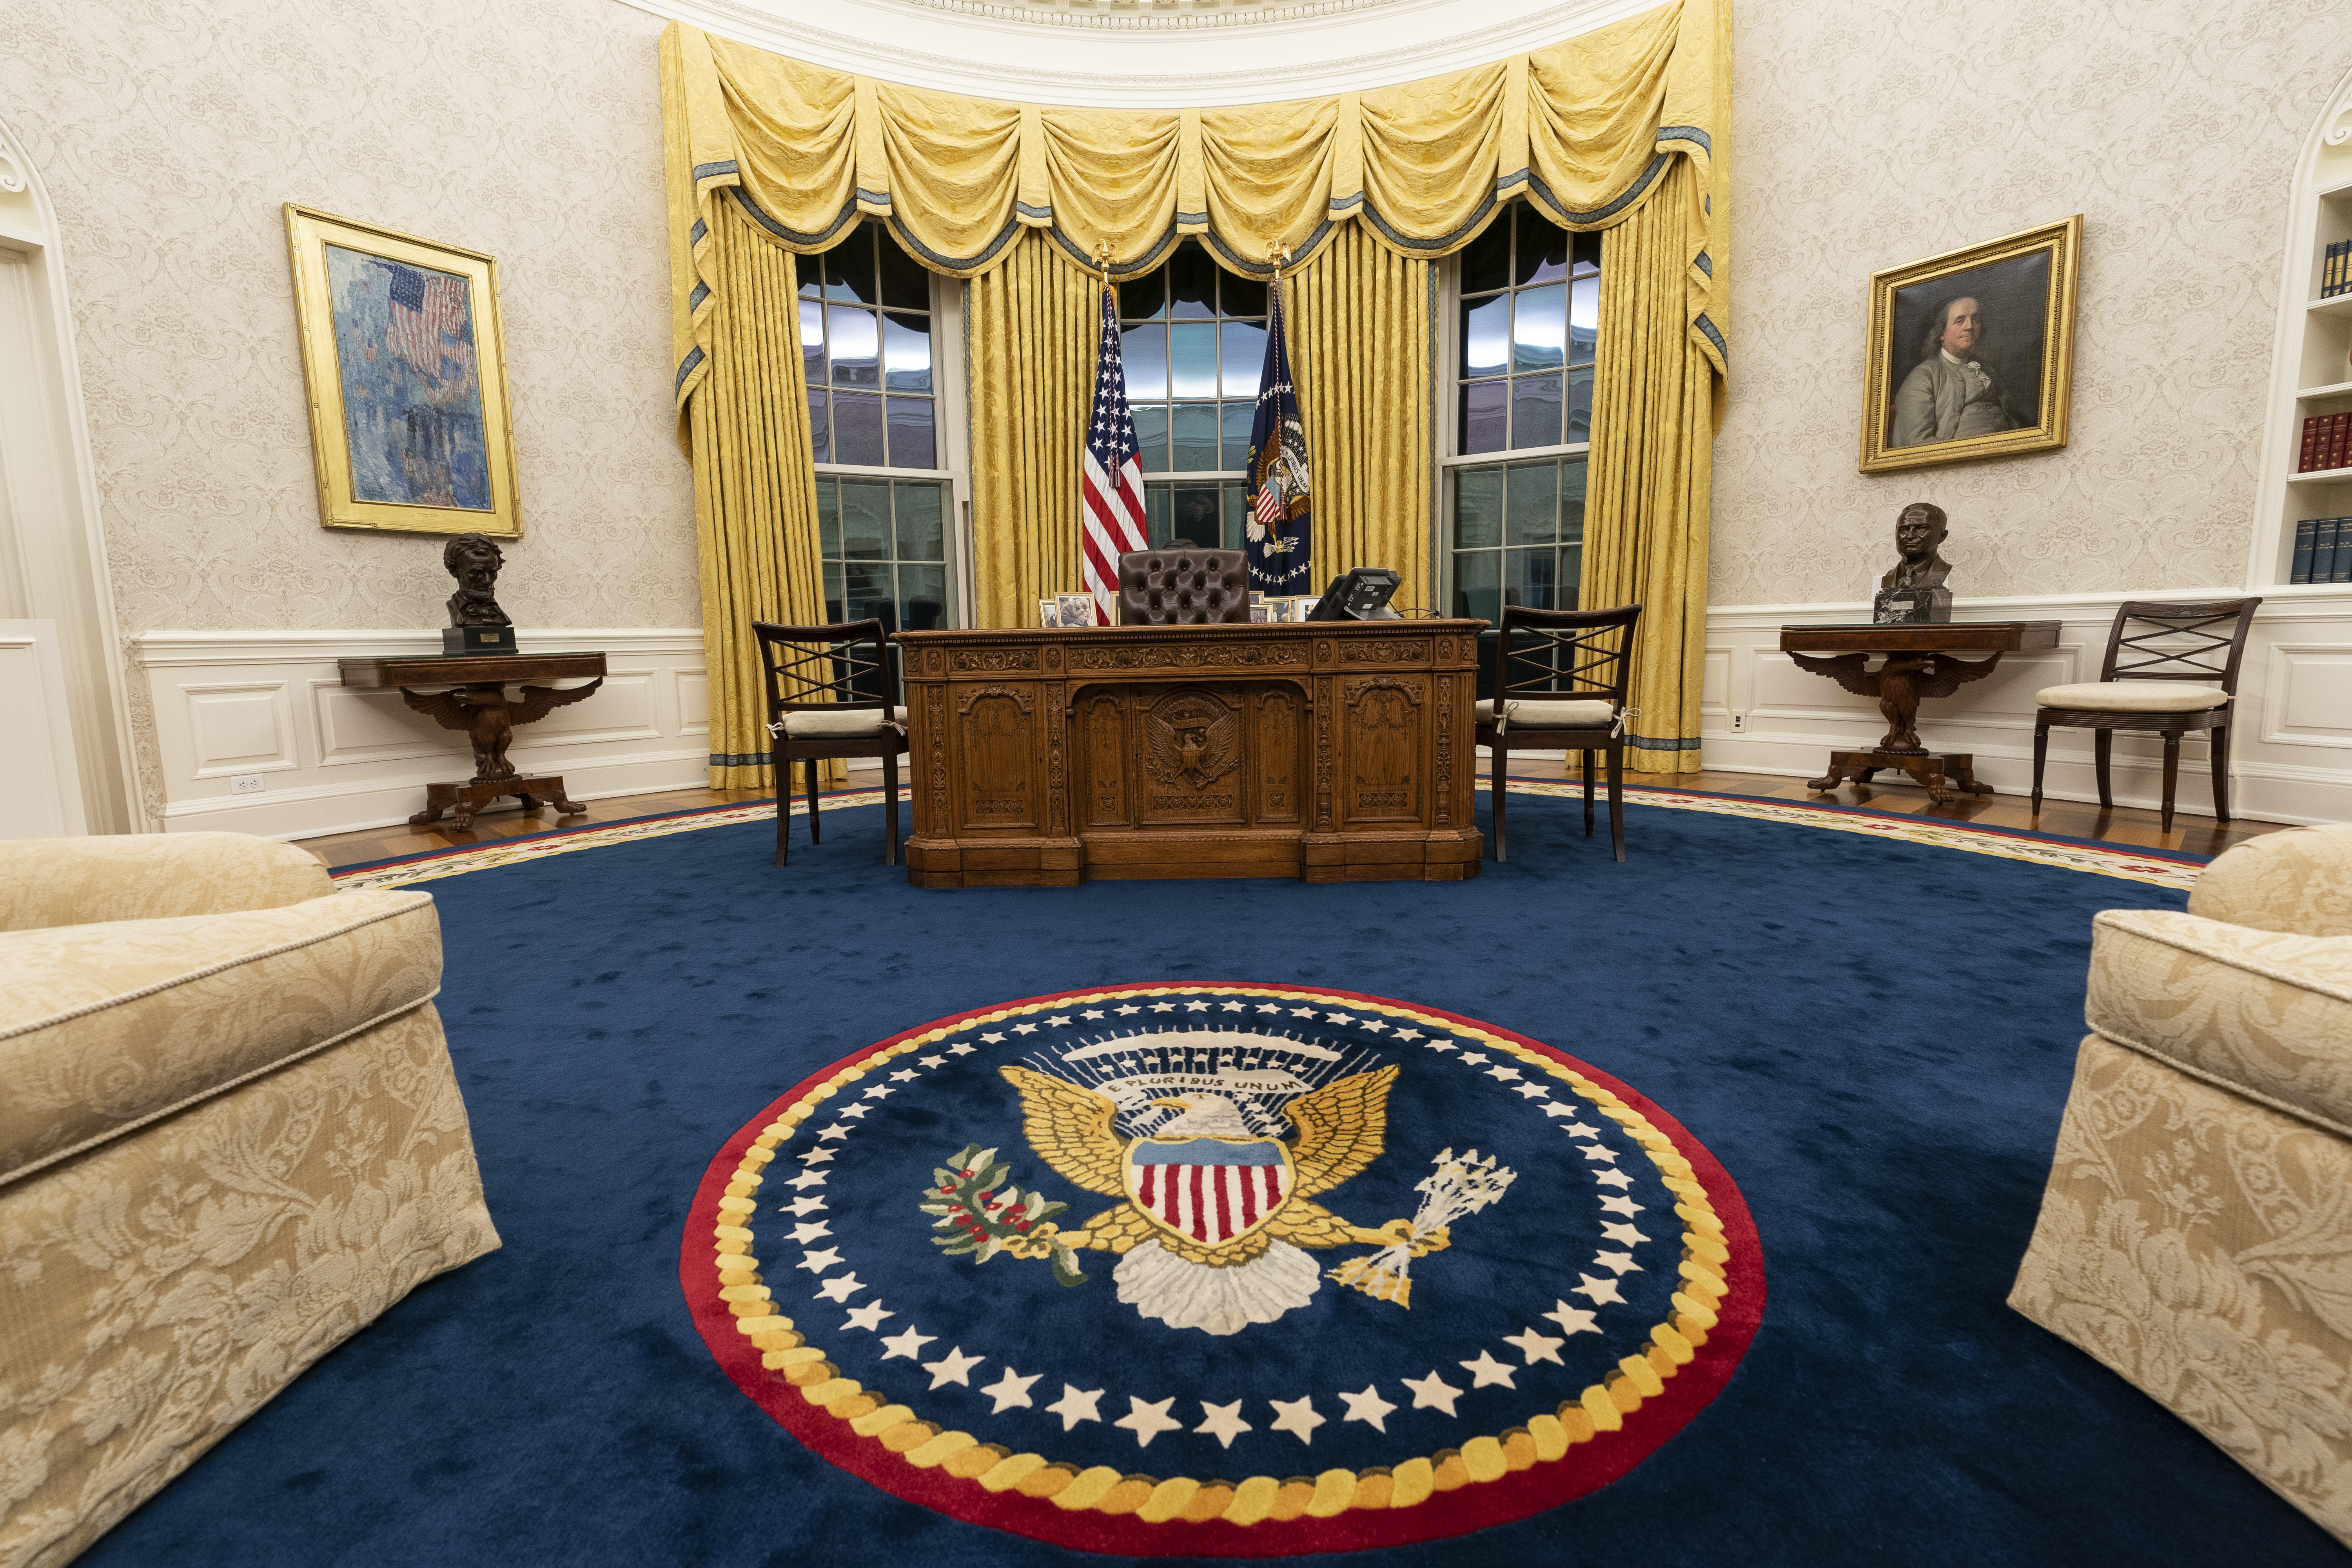 Clinton-era decor featured in Biden's Oval Office